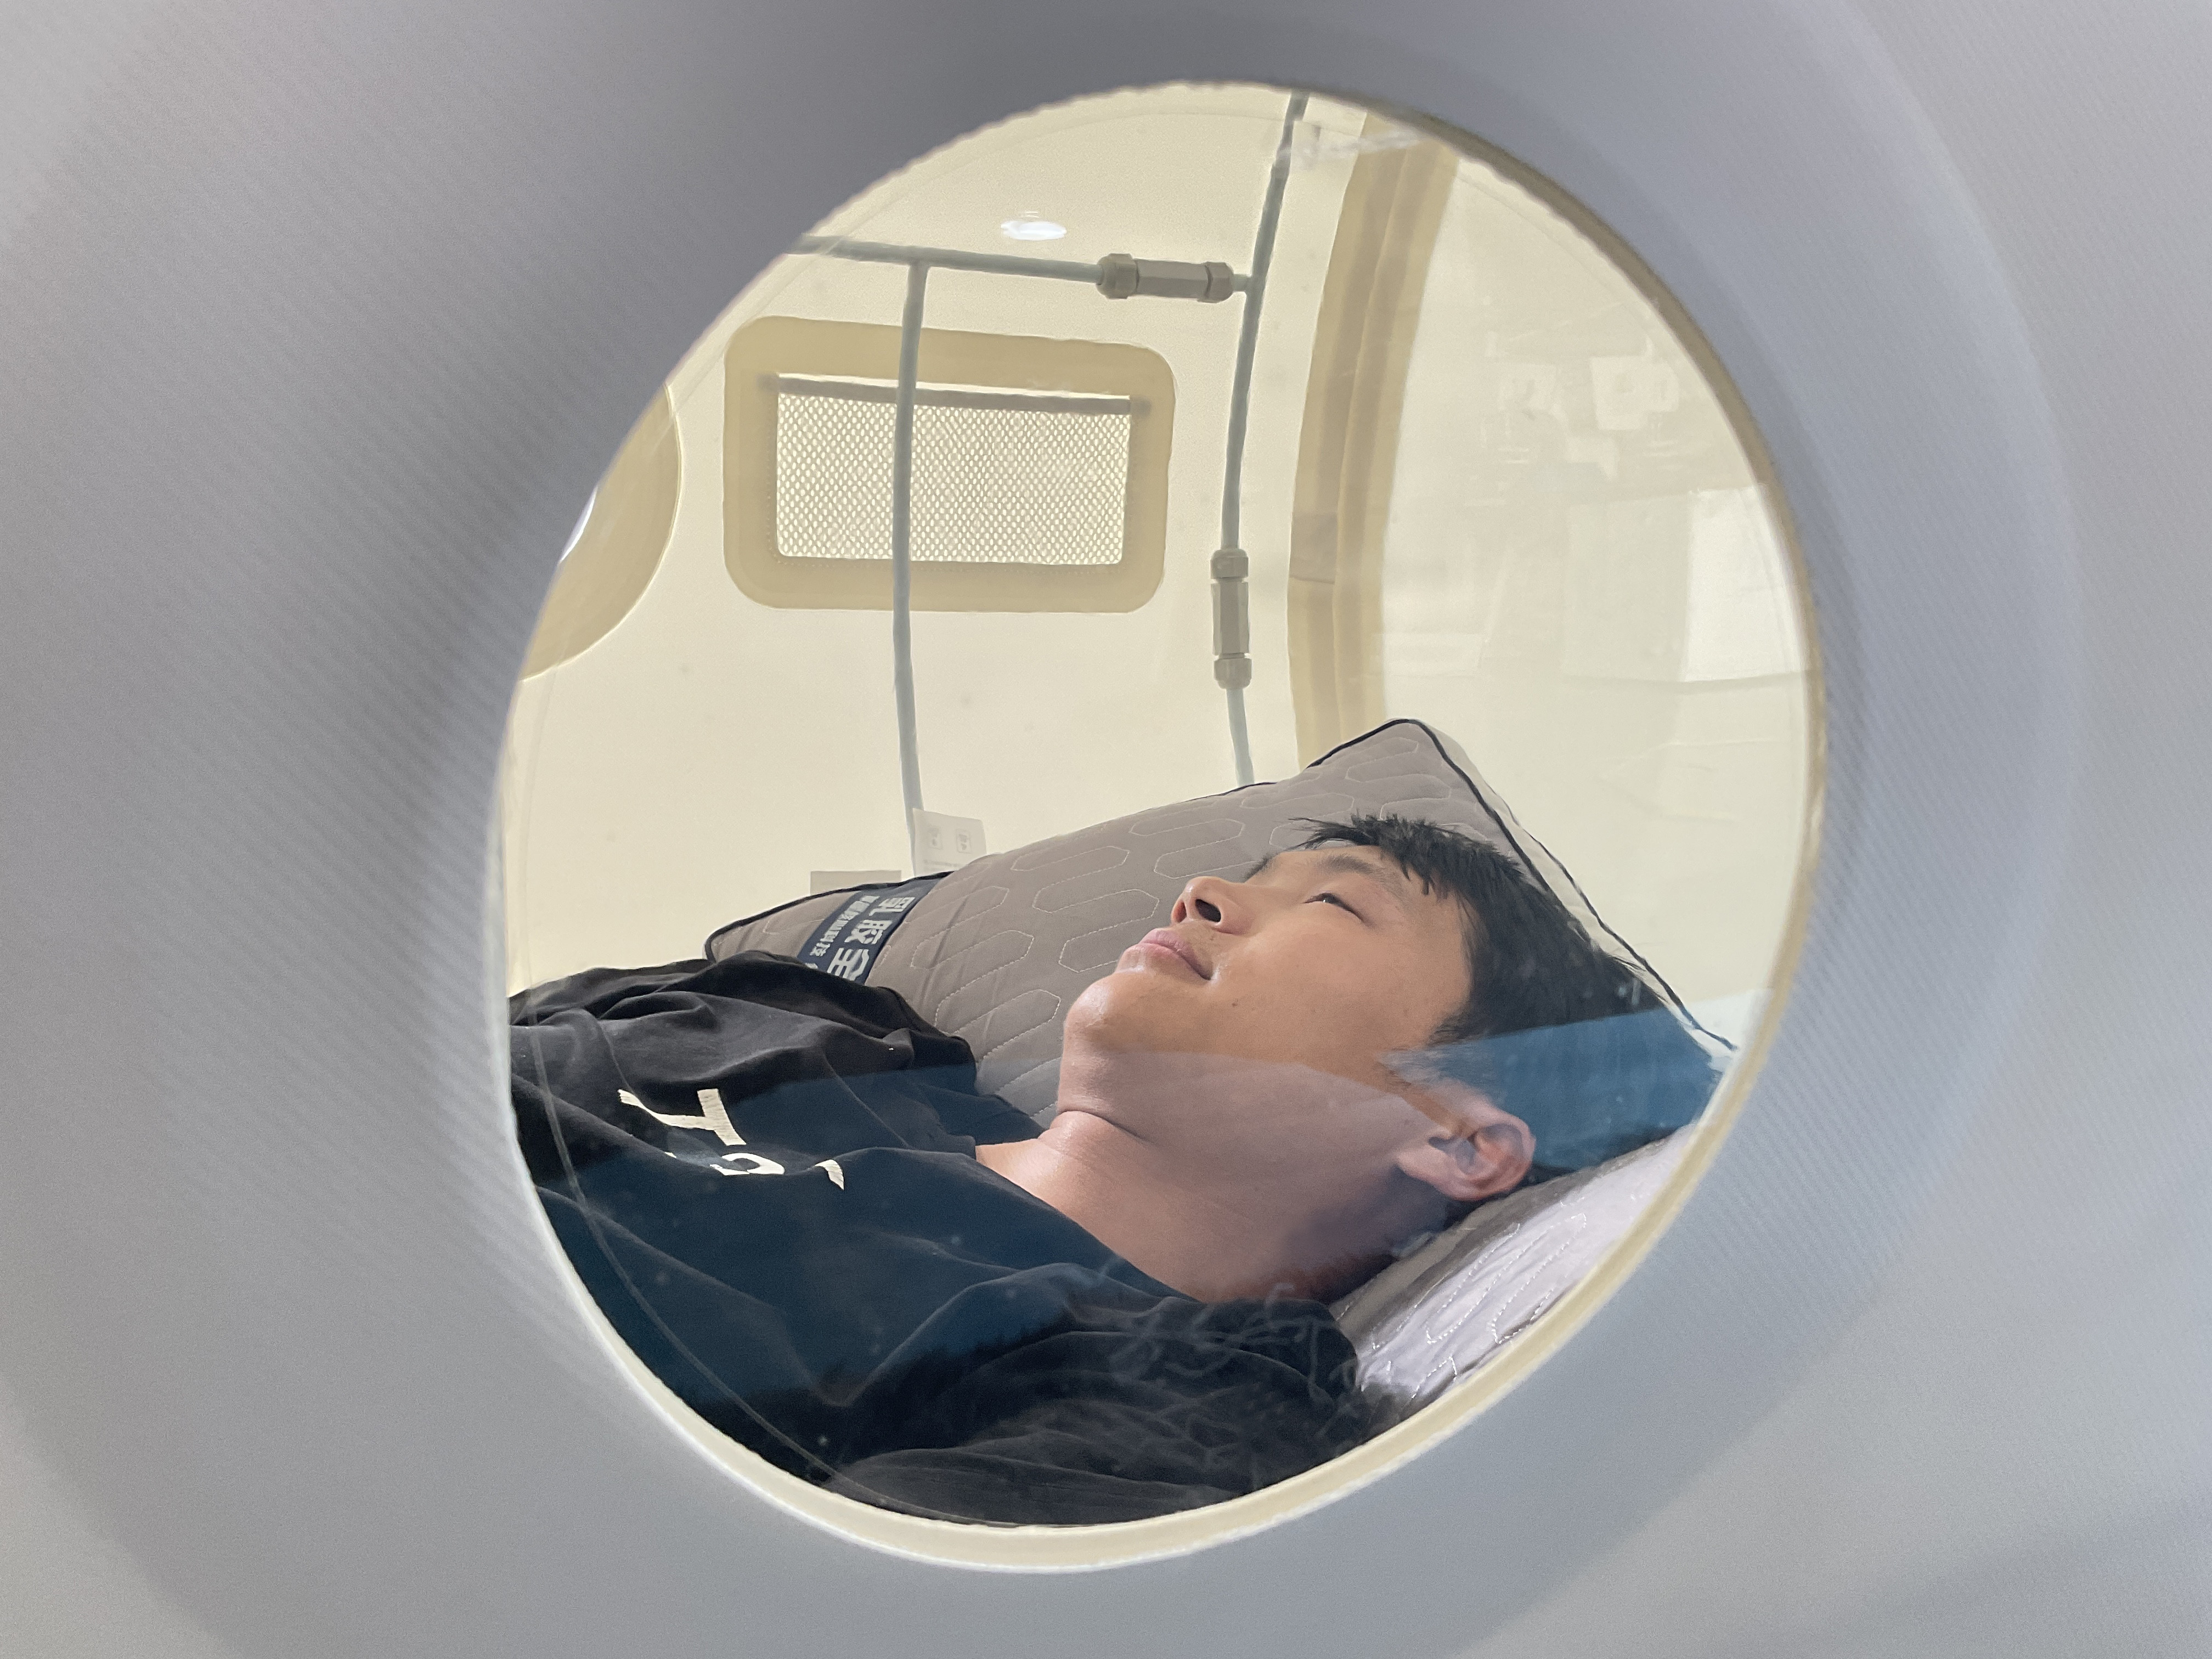 Hyperbaric Chamber LT 900 sleep